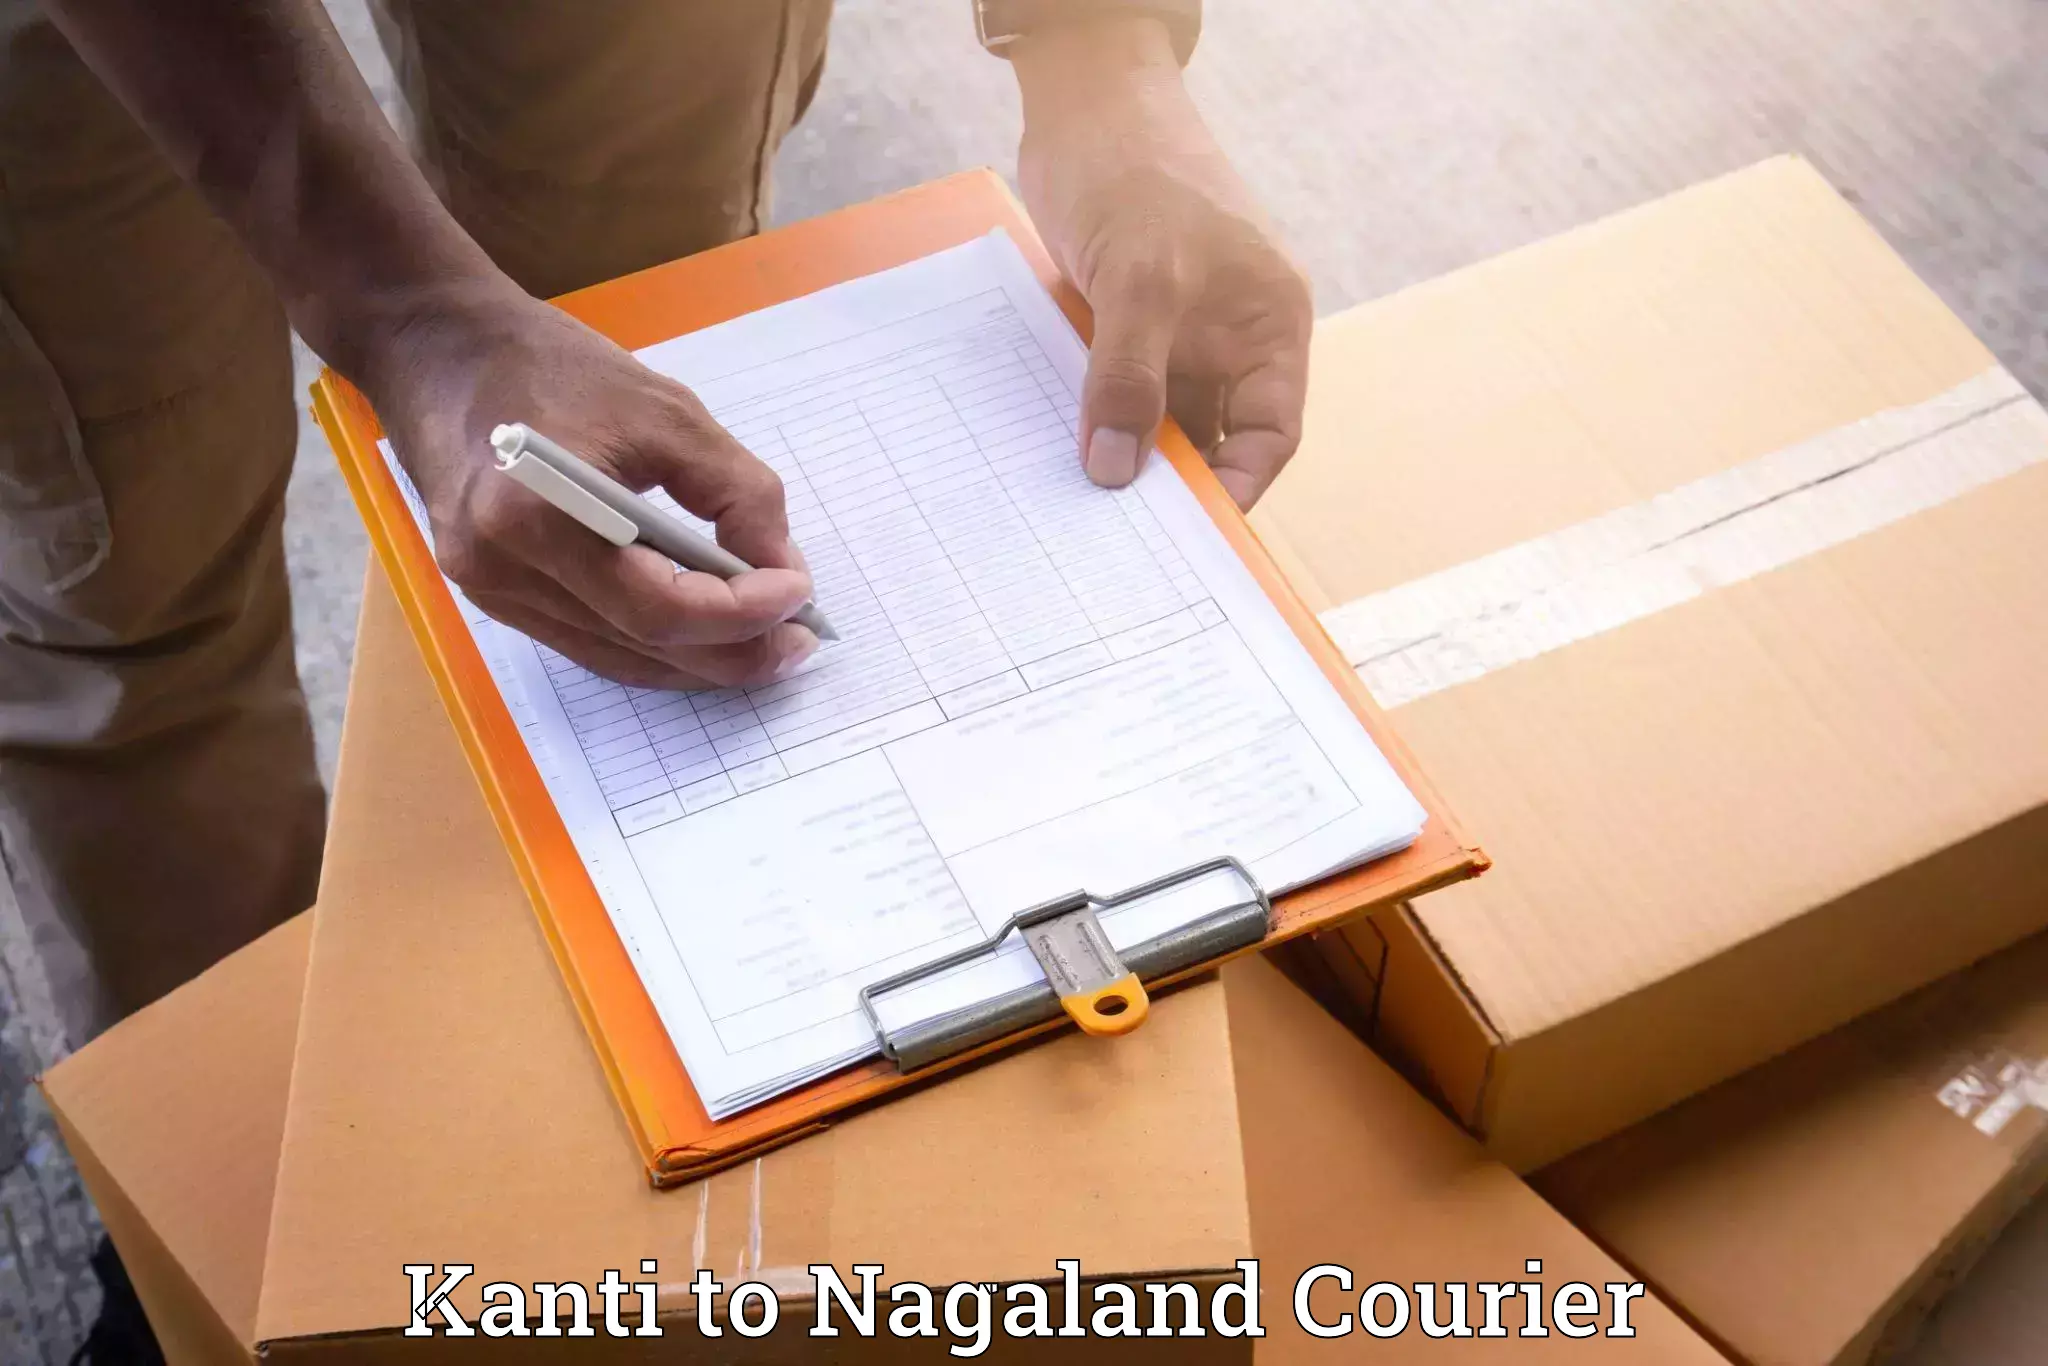 Specialized moving company Kanti to Nagaland